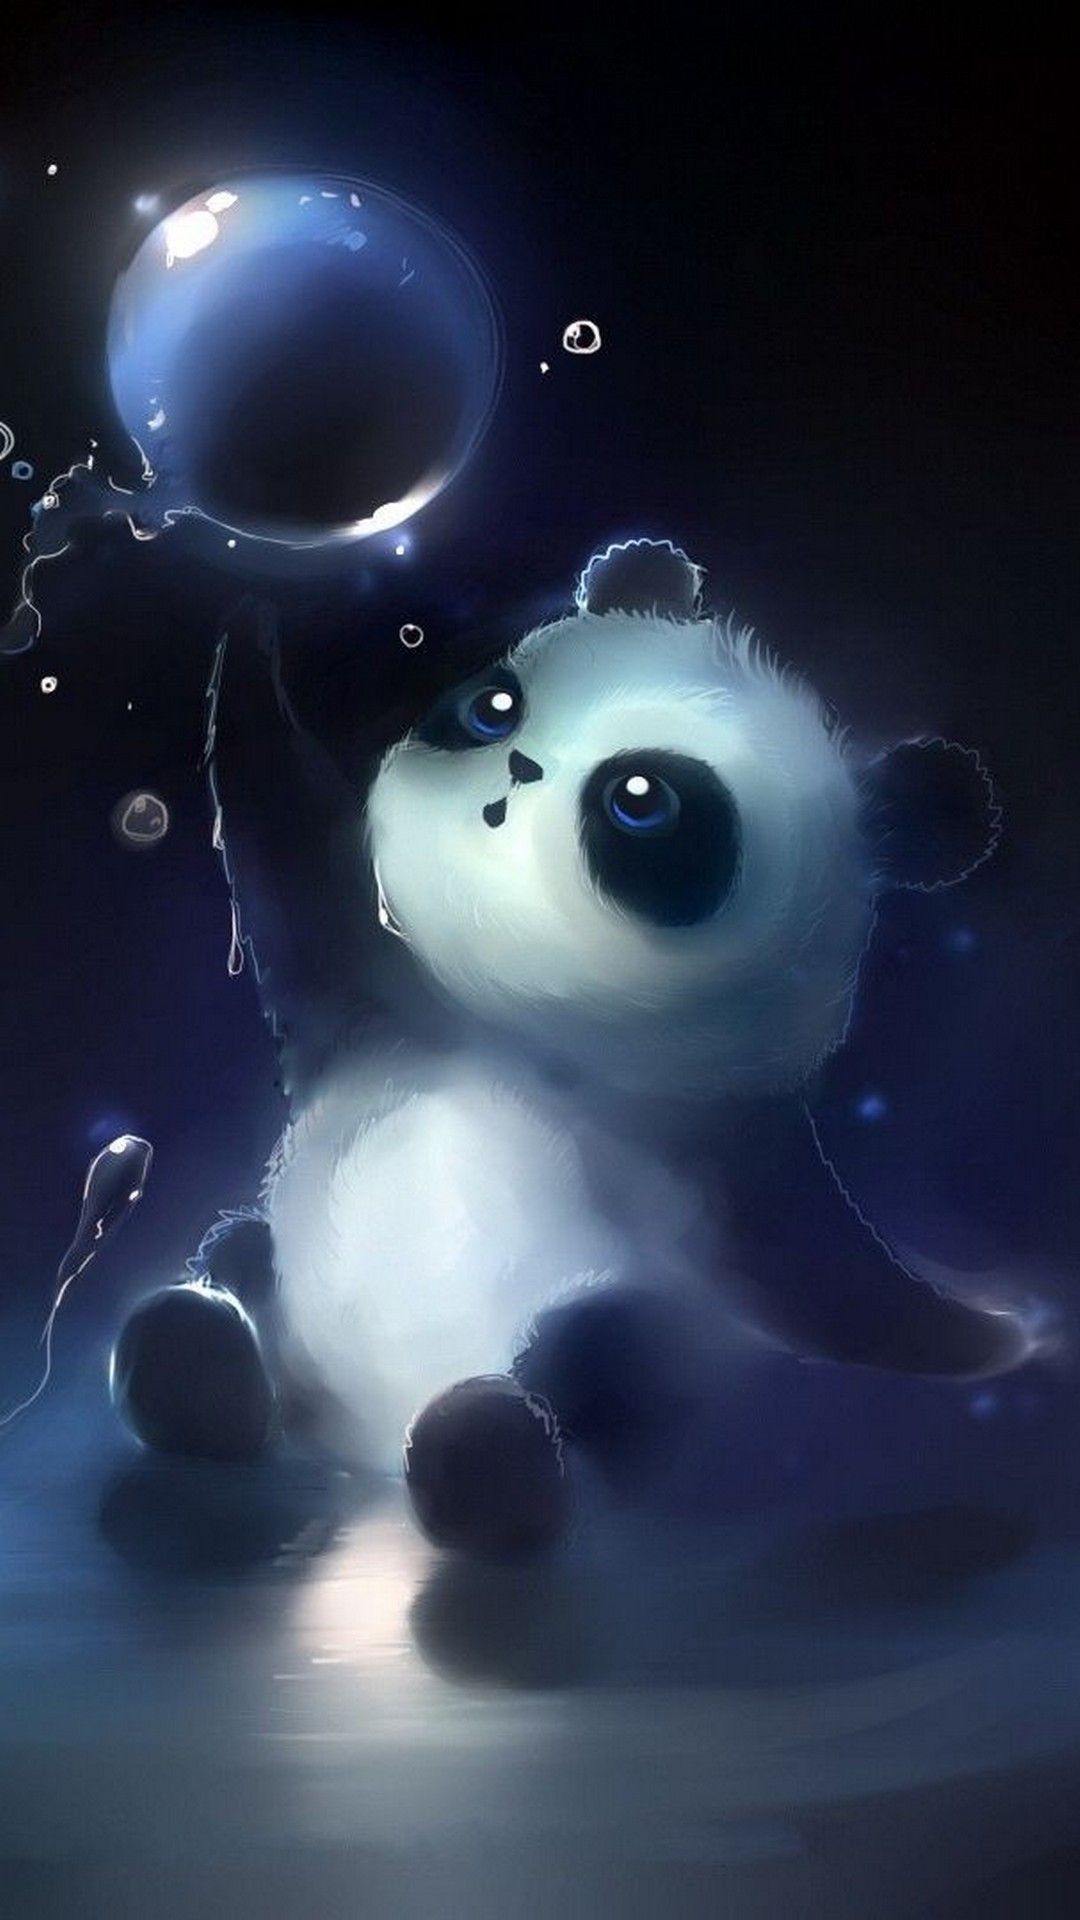 Android Wallpaper HD Baby Panda - 2019 fondos de pantalla de Android